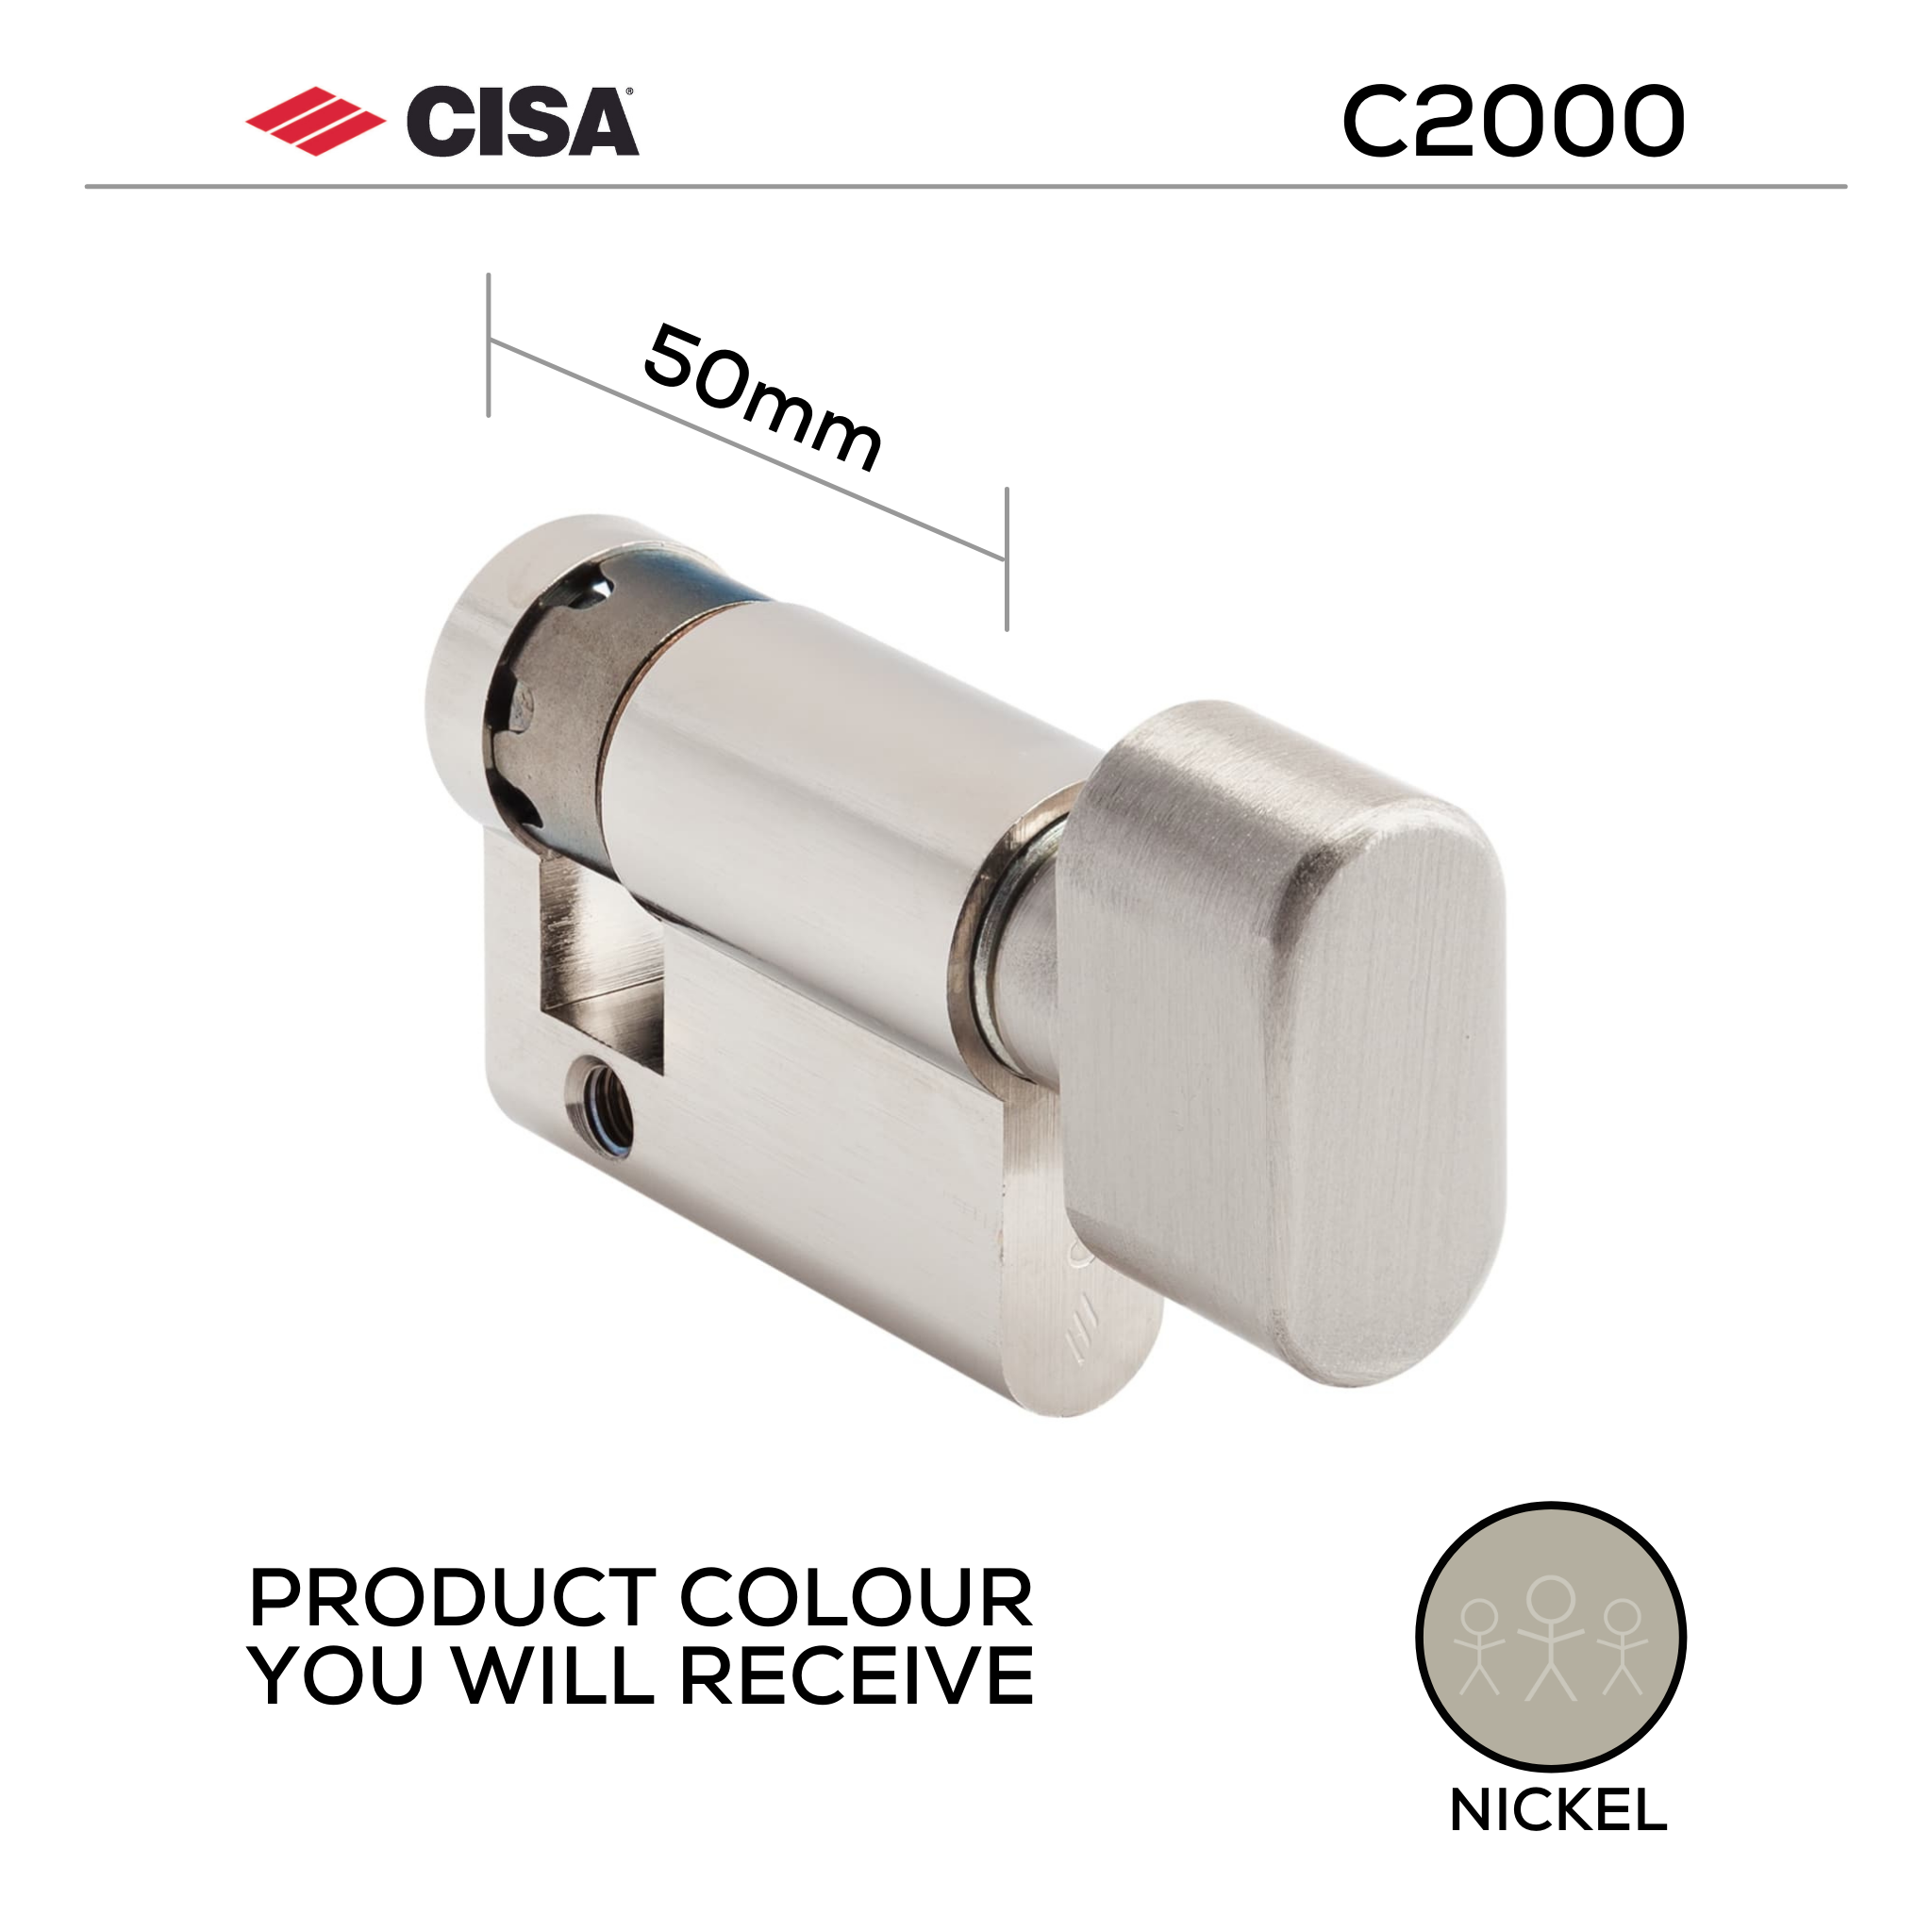 08559-18-12-KD, 50mm - 40/10, Half (Single Cylinder), C2000, Thumbturn, Keyed to Differ (Standard), Nickel, CISA